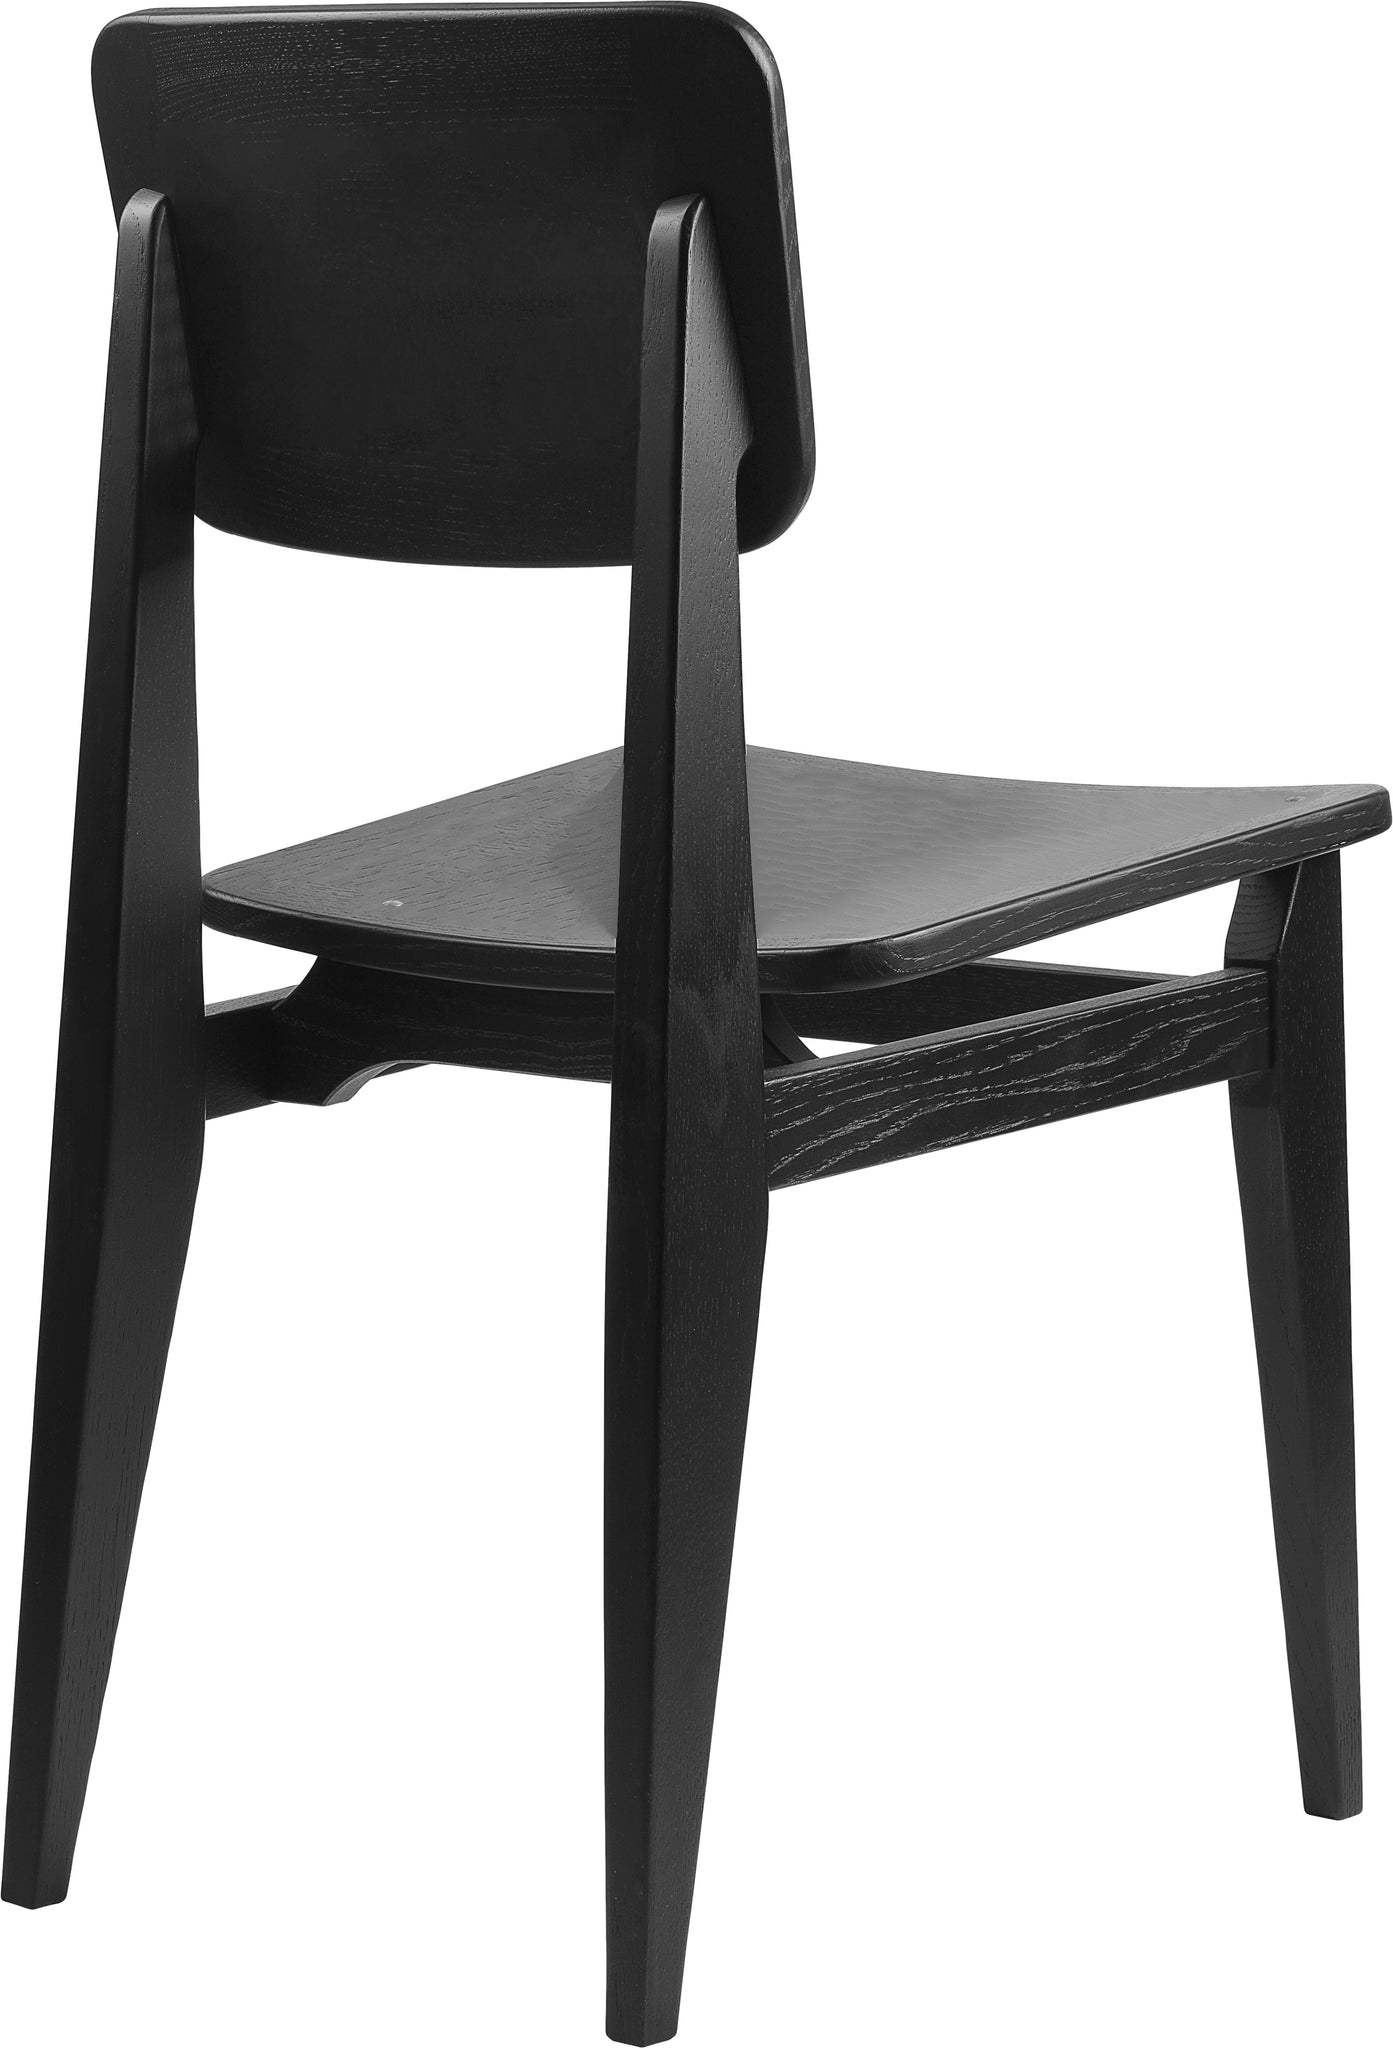 GUBI - C-Chair Dining Chair - Un-Upholstered, Veneer